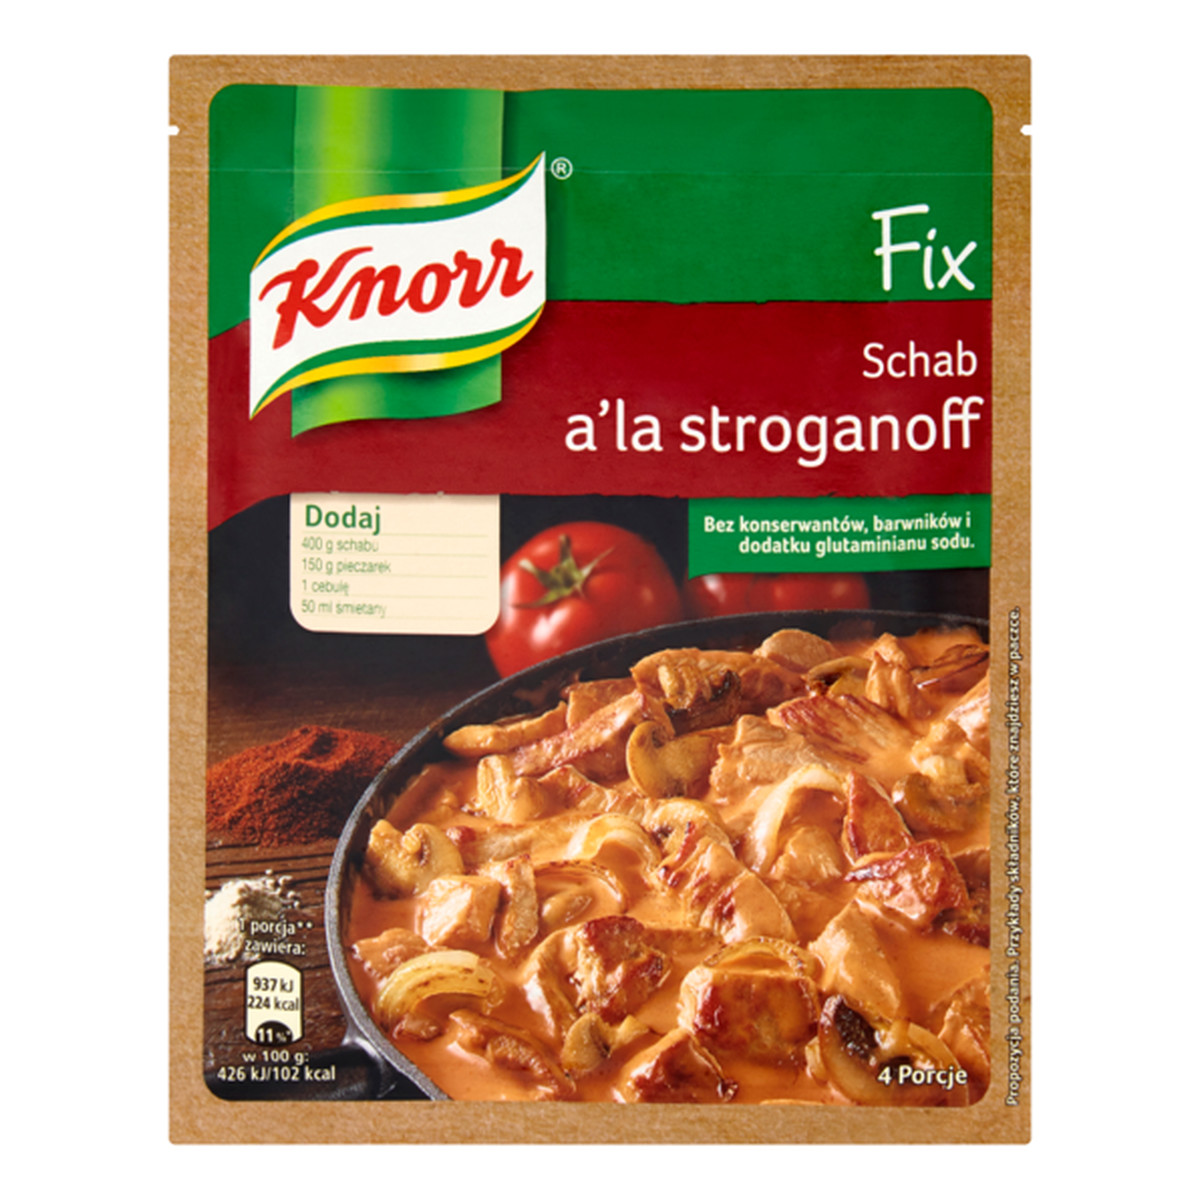 Knorr Fix Schab a'la stroganoff 56g